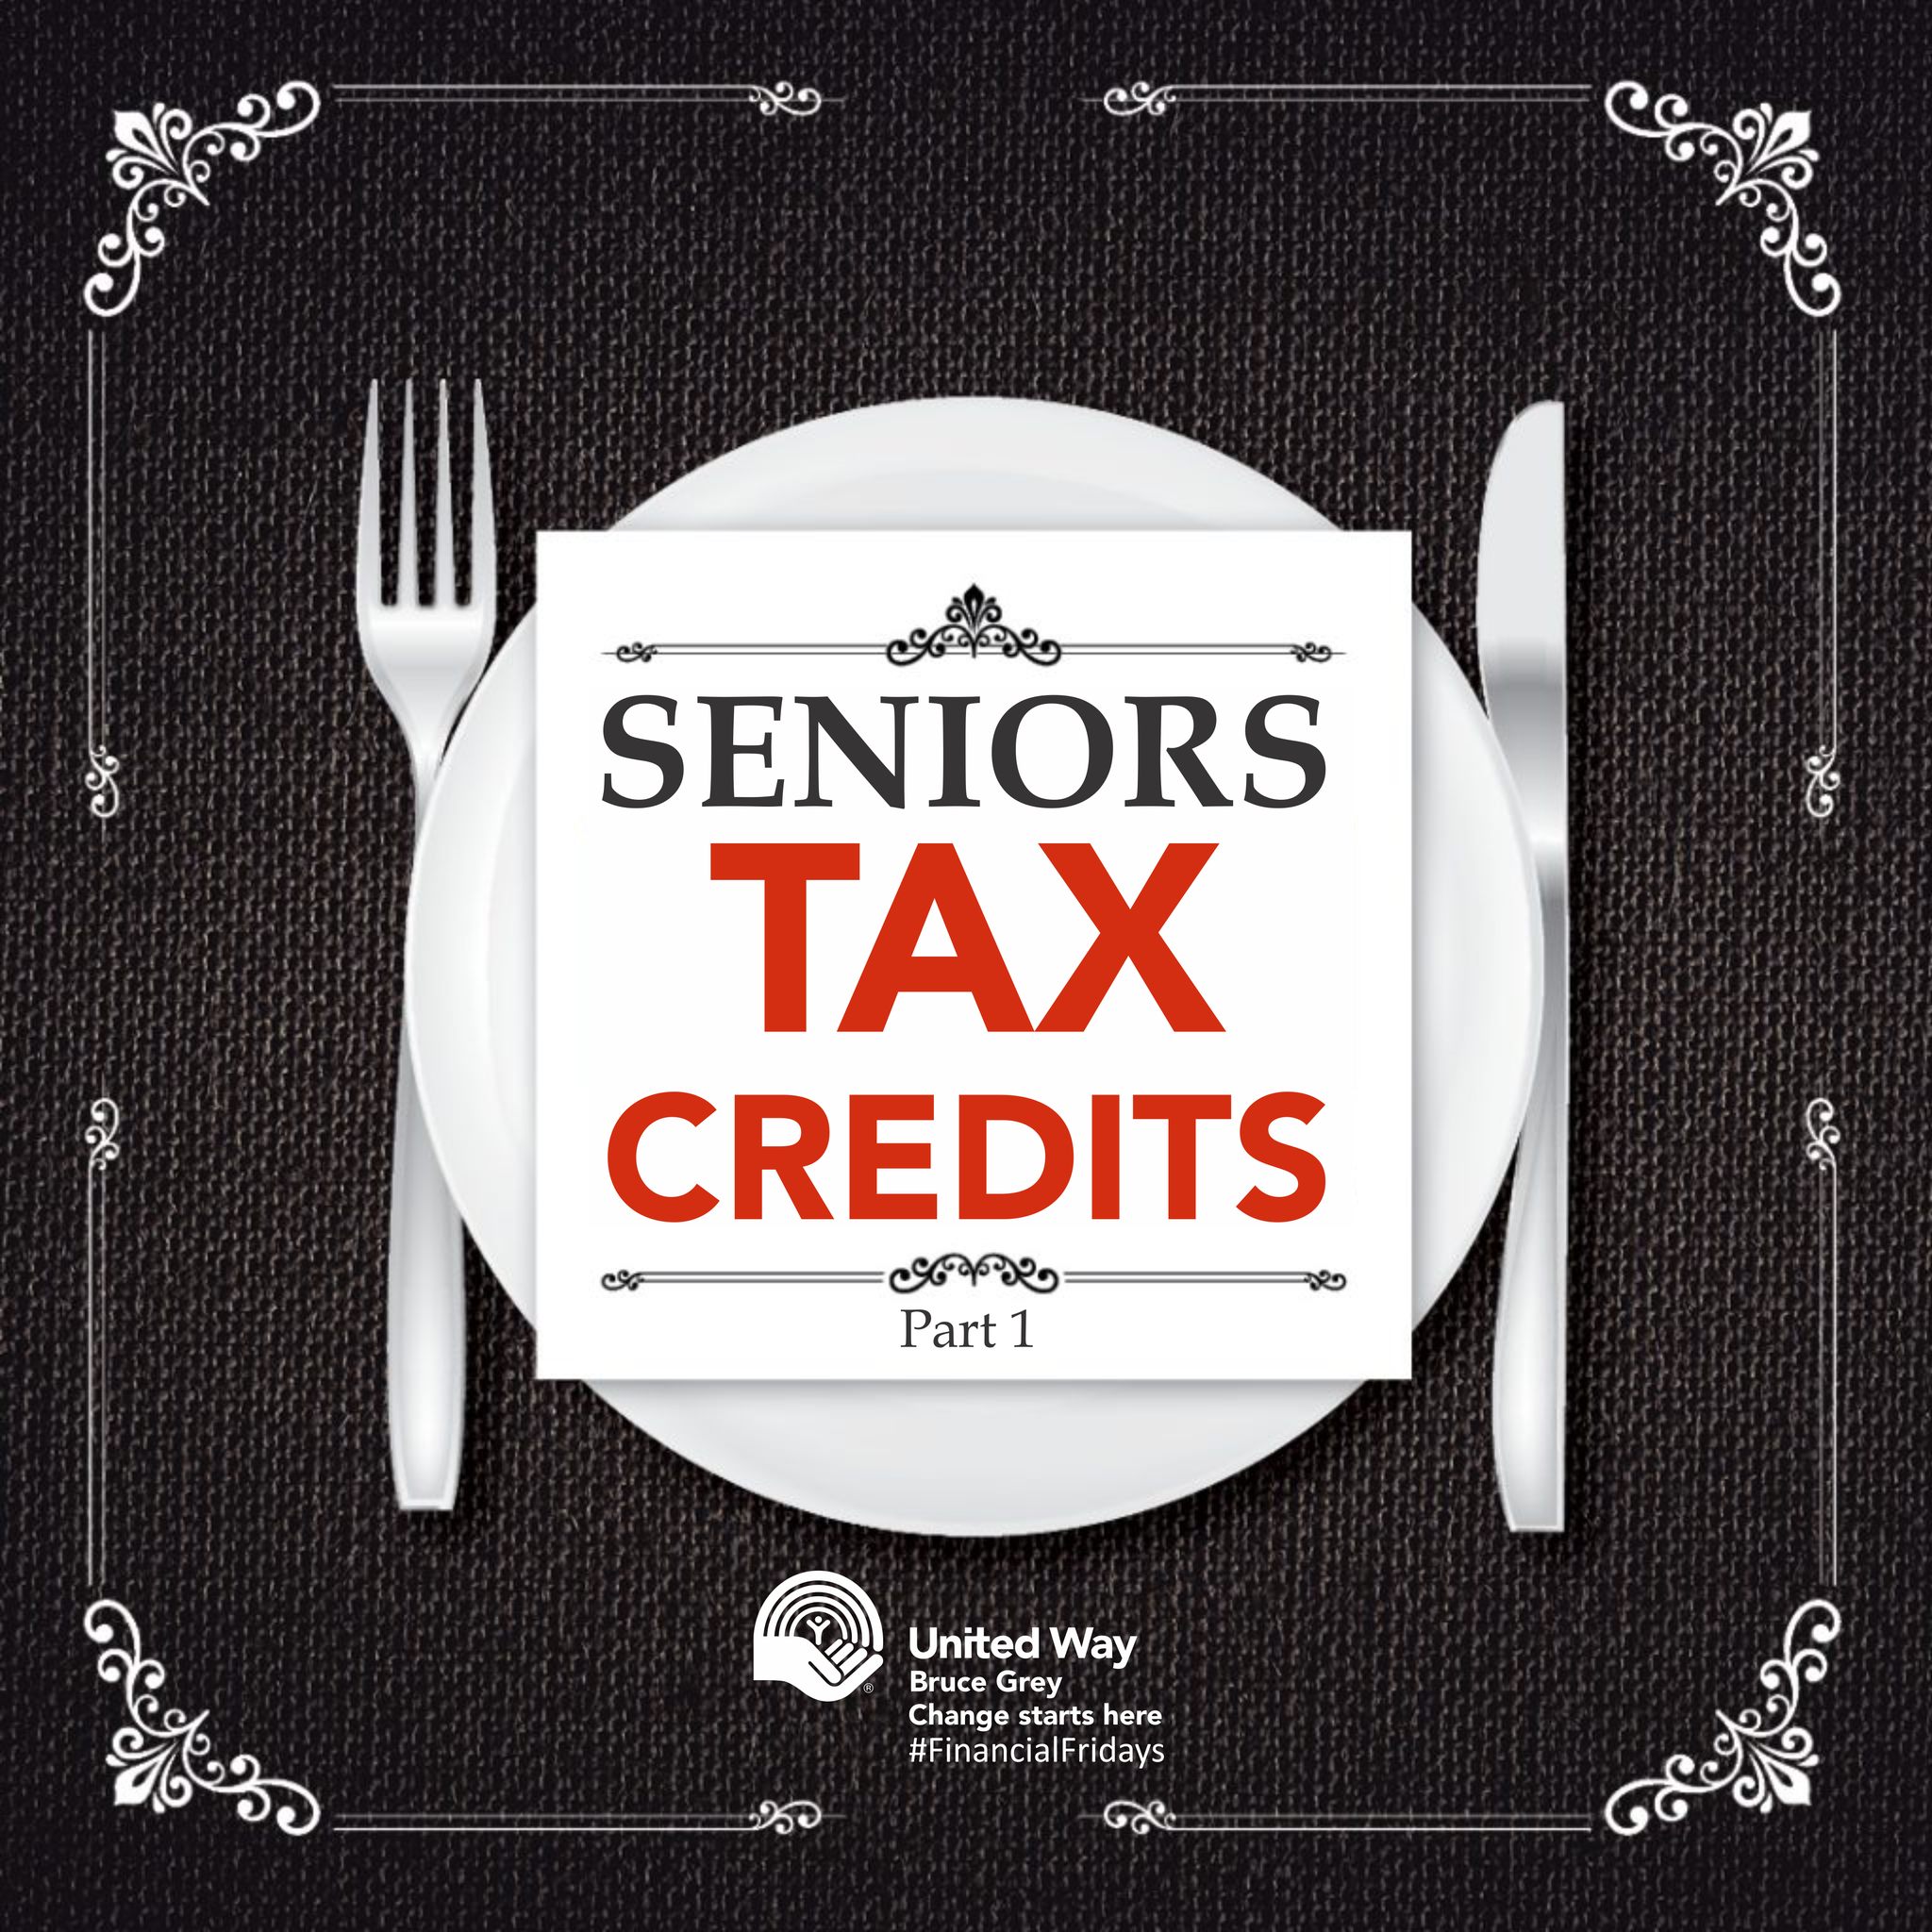 financialfridays-seniors-tax-credits-part-1-united-way-of-bruce-grey